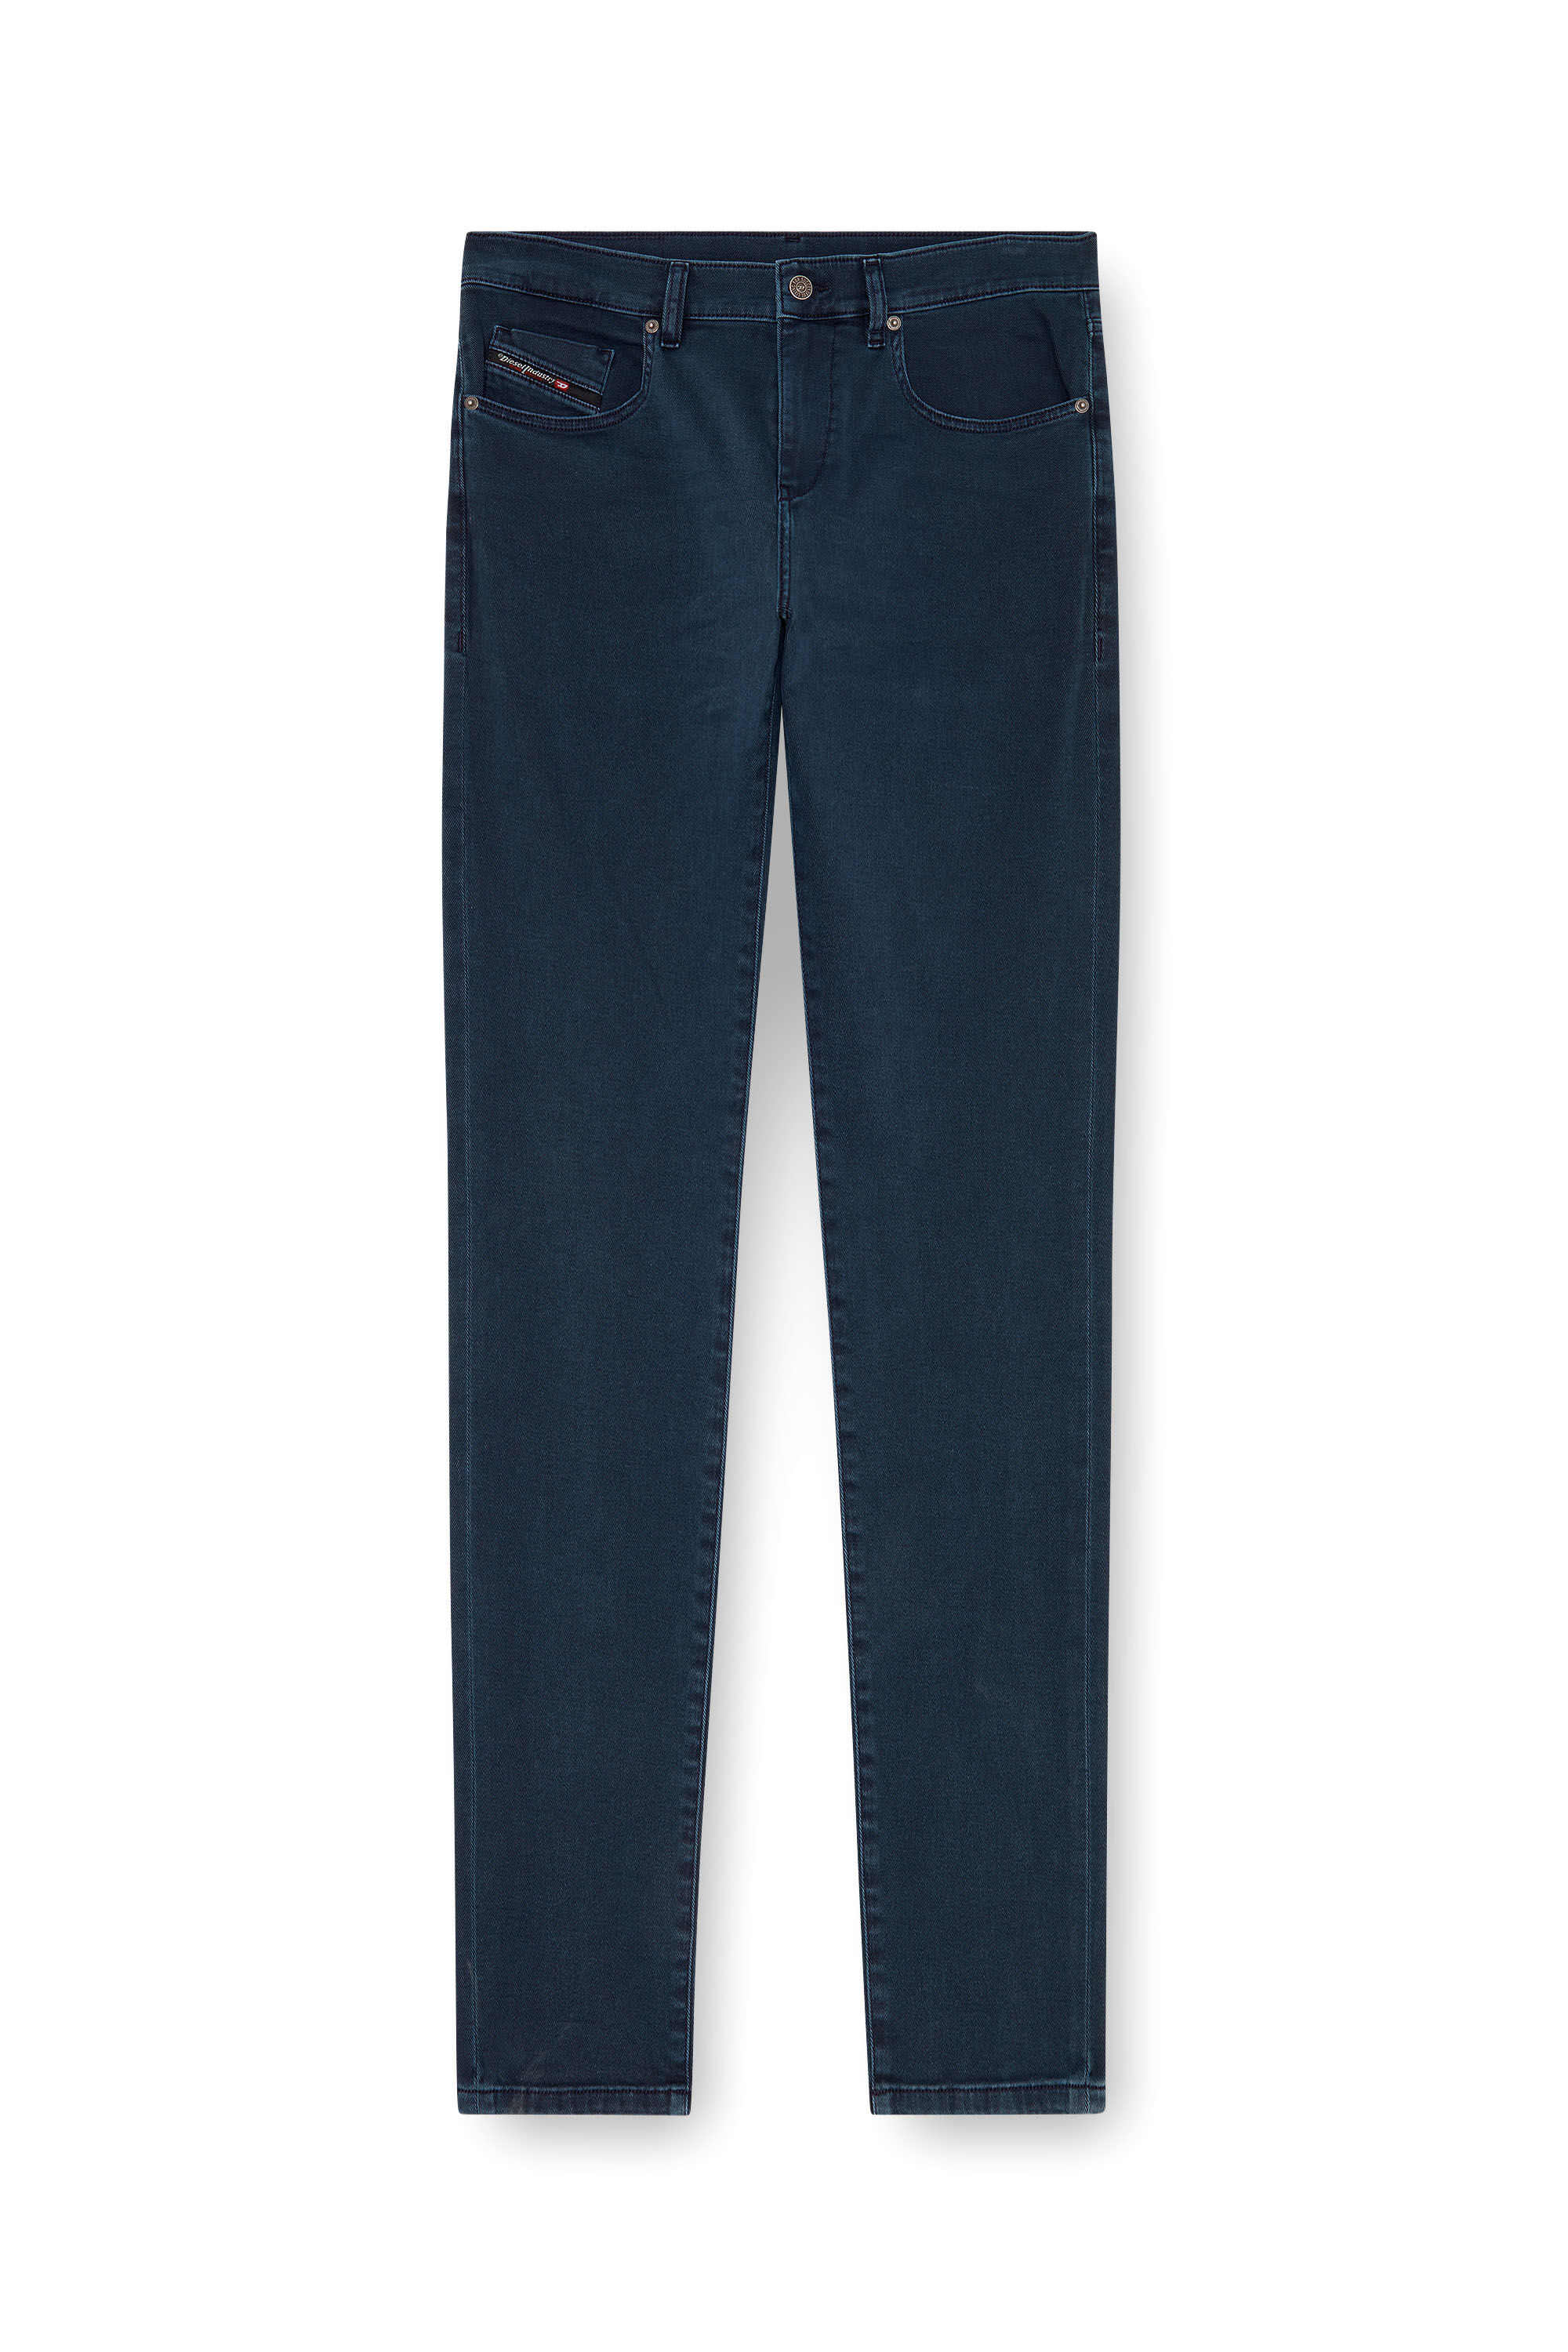 Diesel - Slim Jeans 2019 D-Strukt 0QWTY, Hombre Slim Jeans - 2019 D-Strukt in Azul marino - Image 2